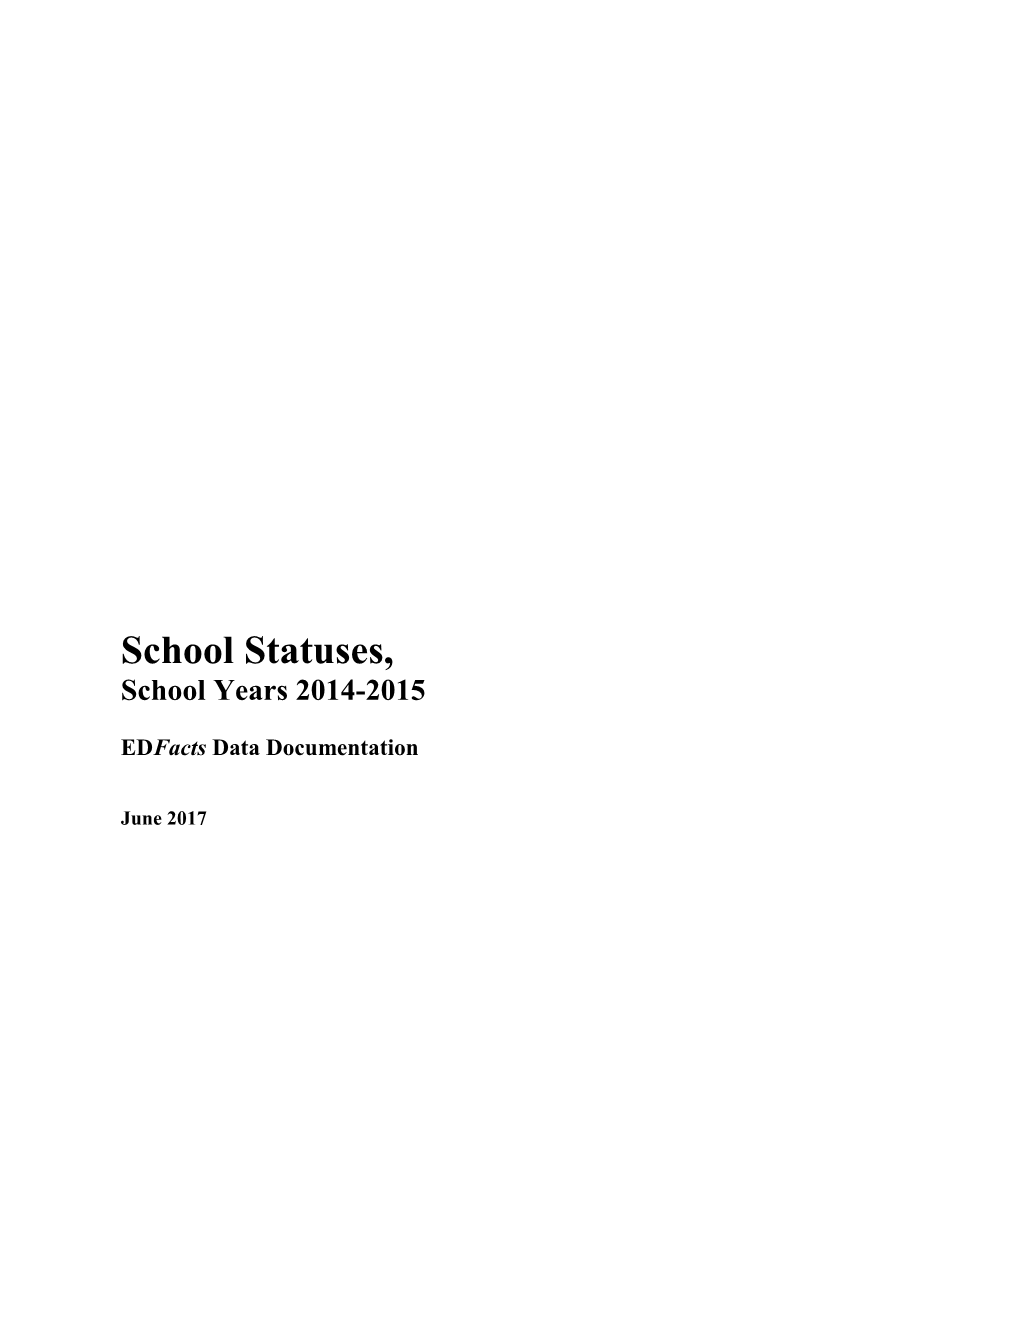 Edfacts Data Notes School Statuses